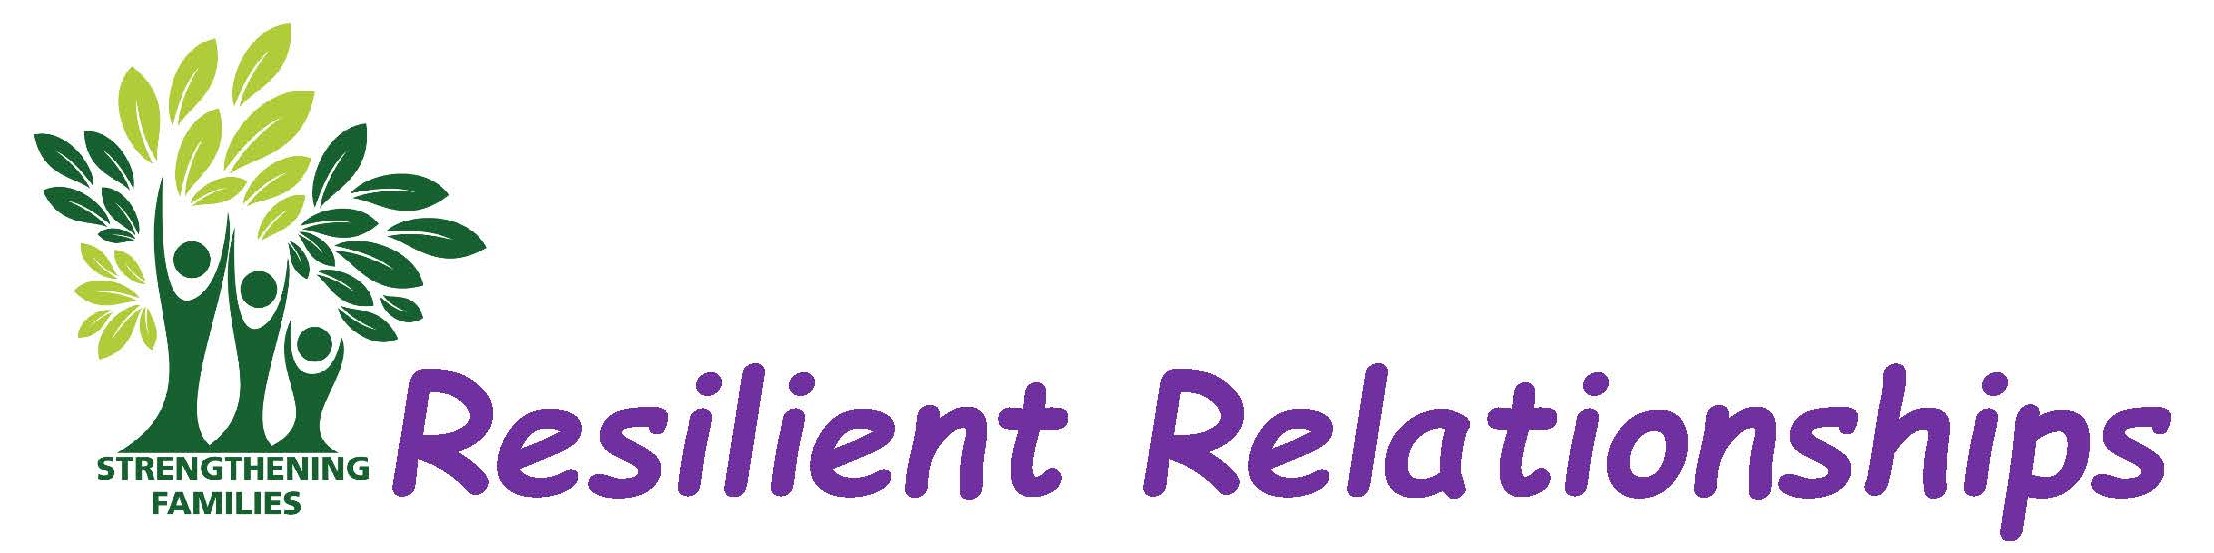 Resilient Relationships logo